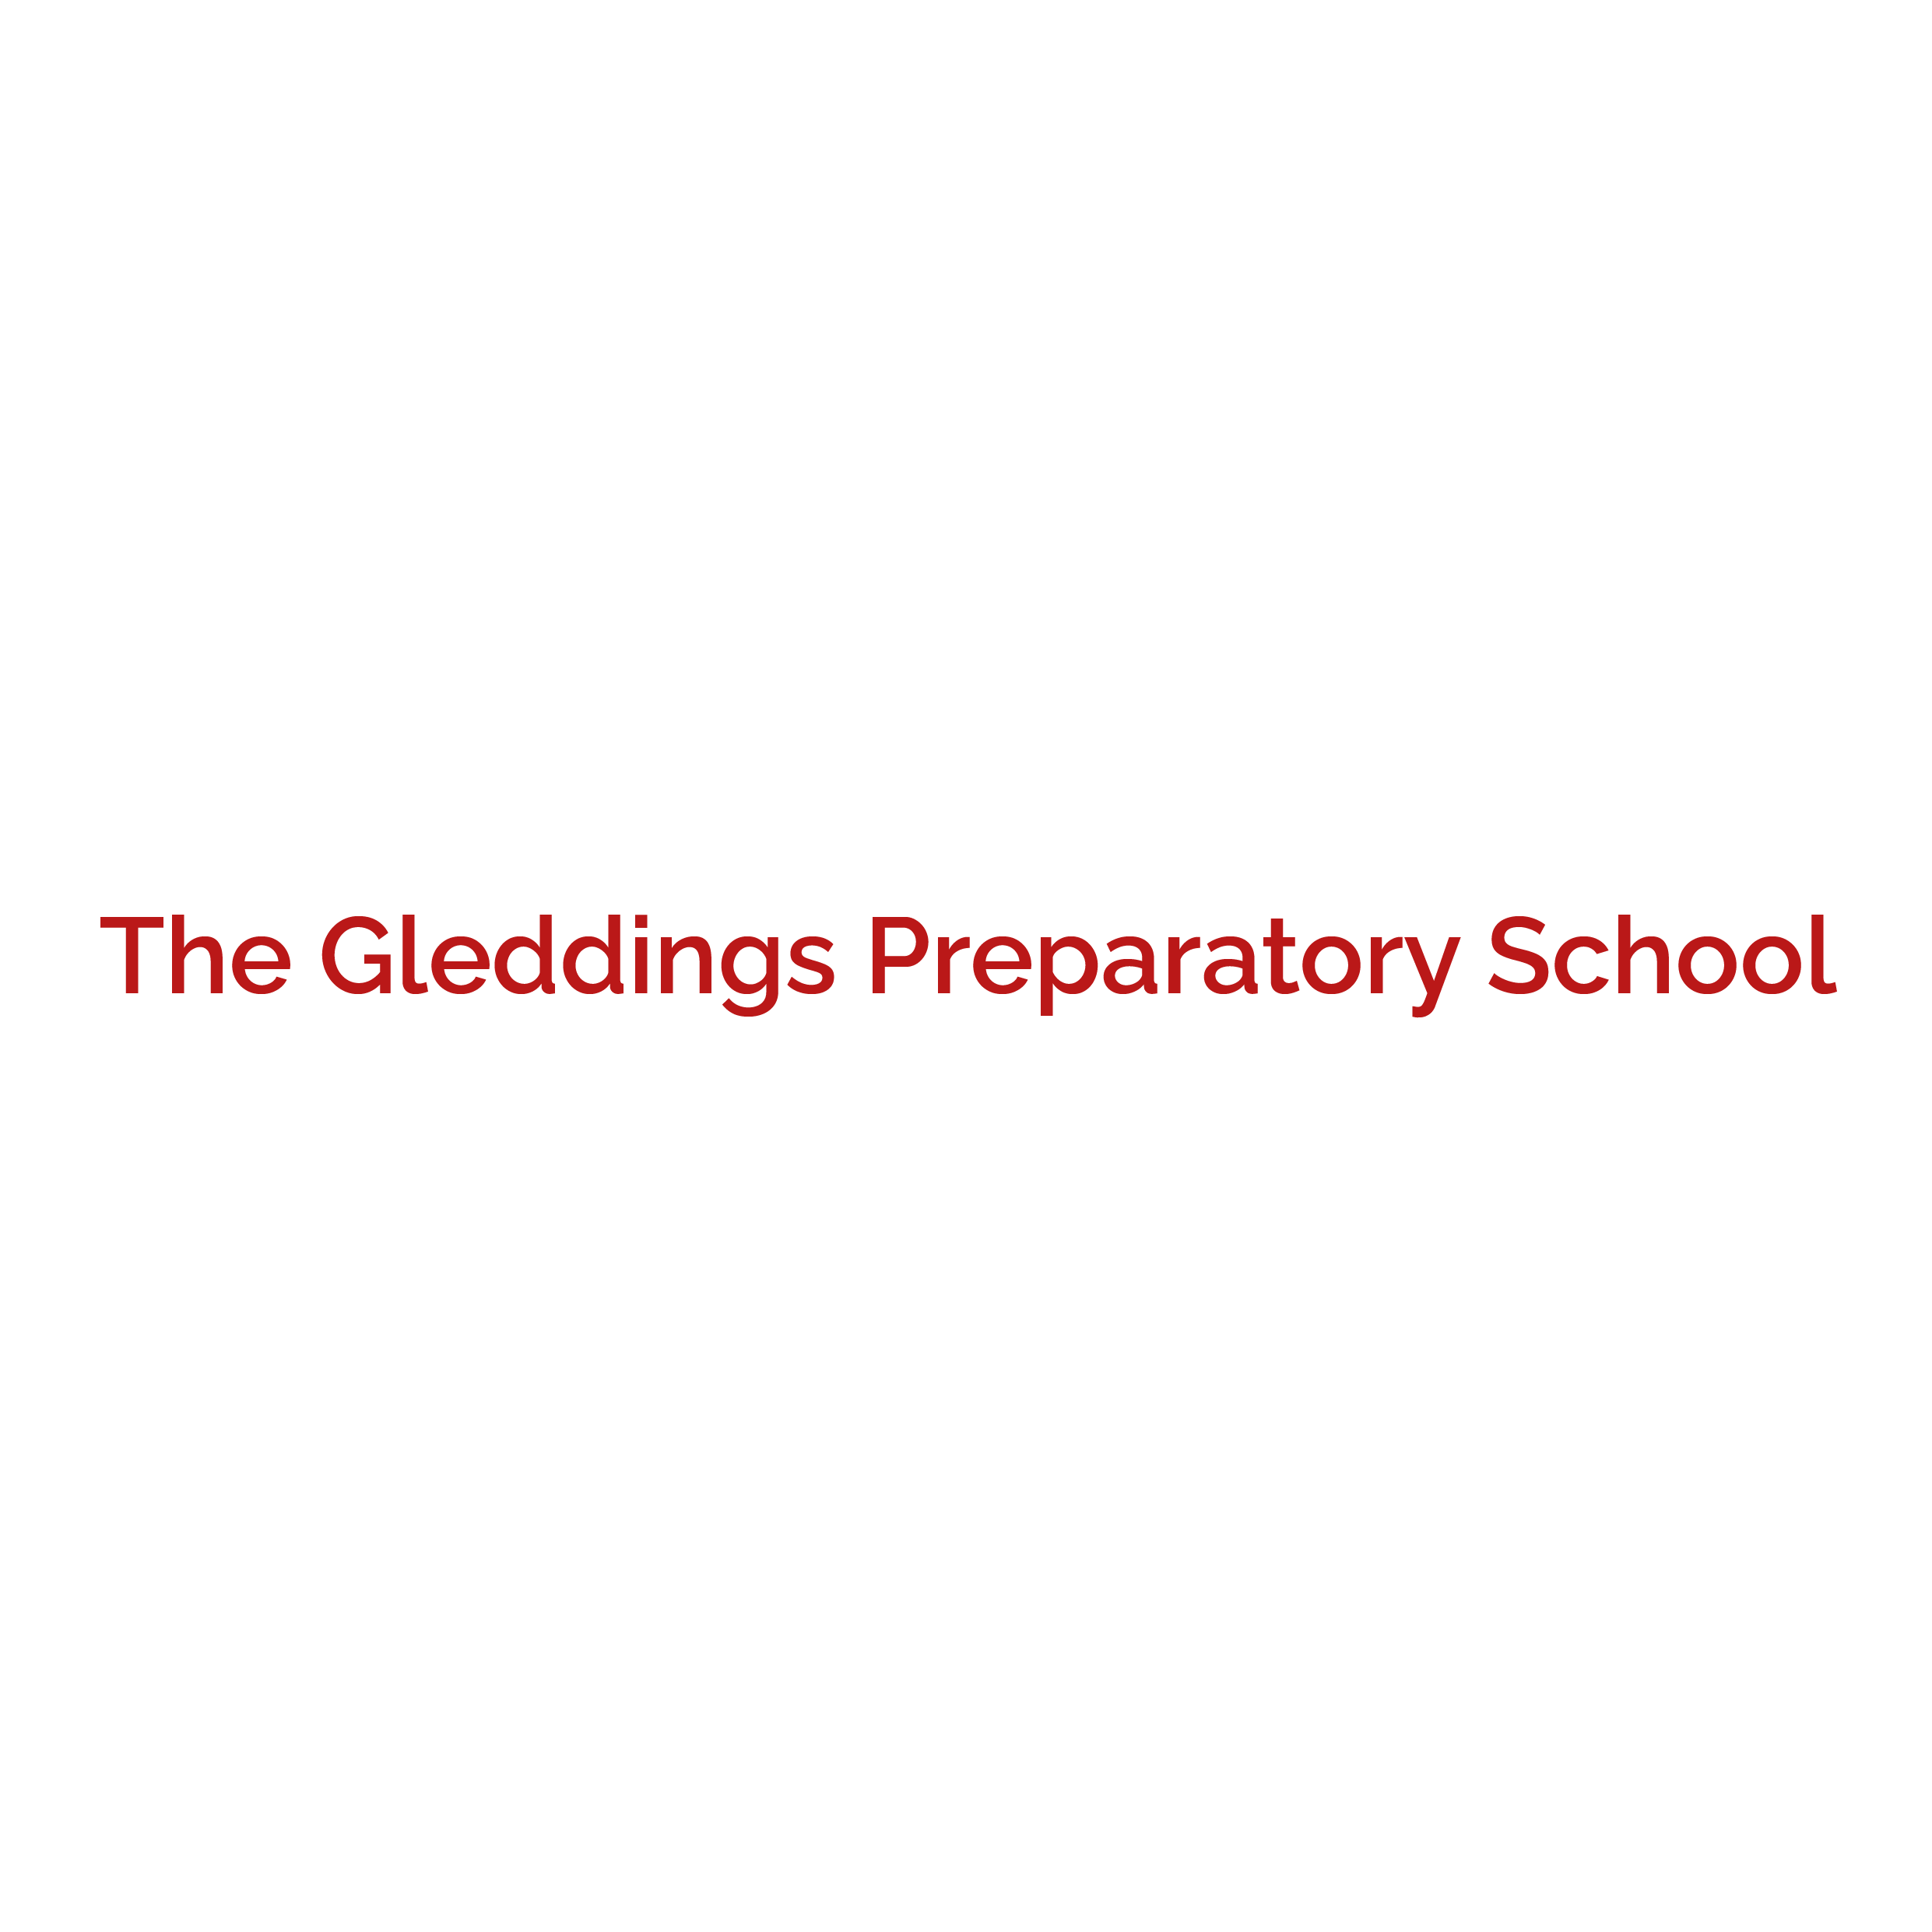 The Gleddings Preparatory School